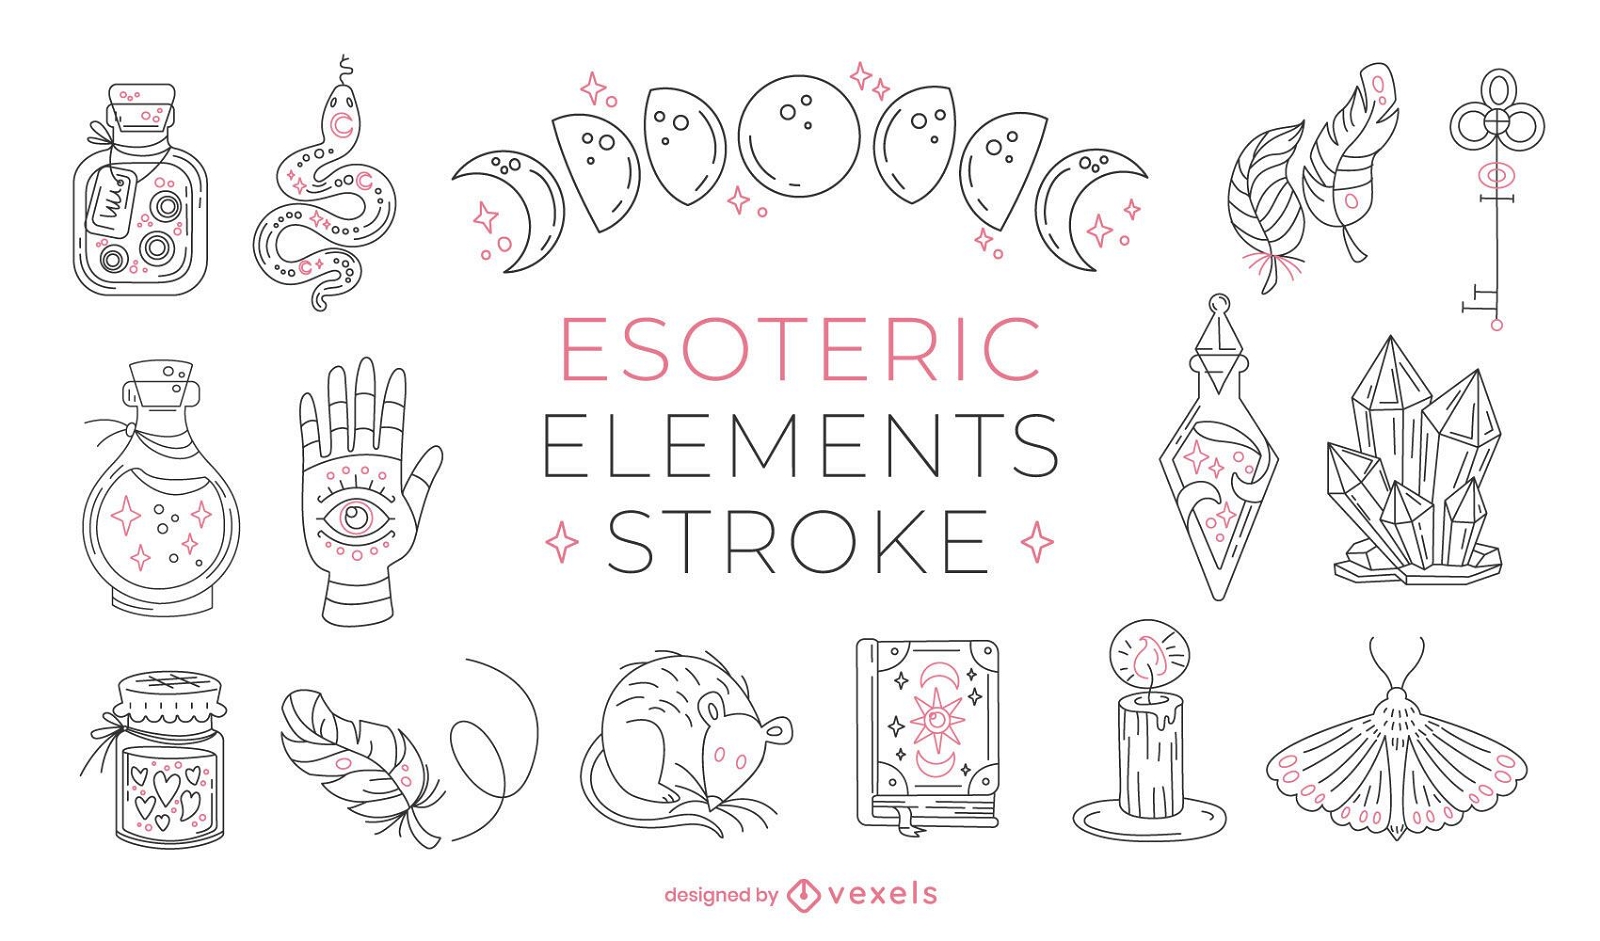 Esoteric elements stroke